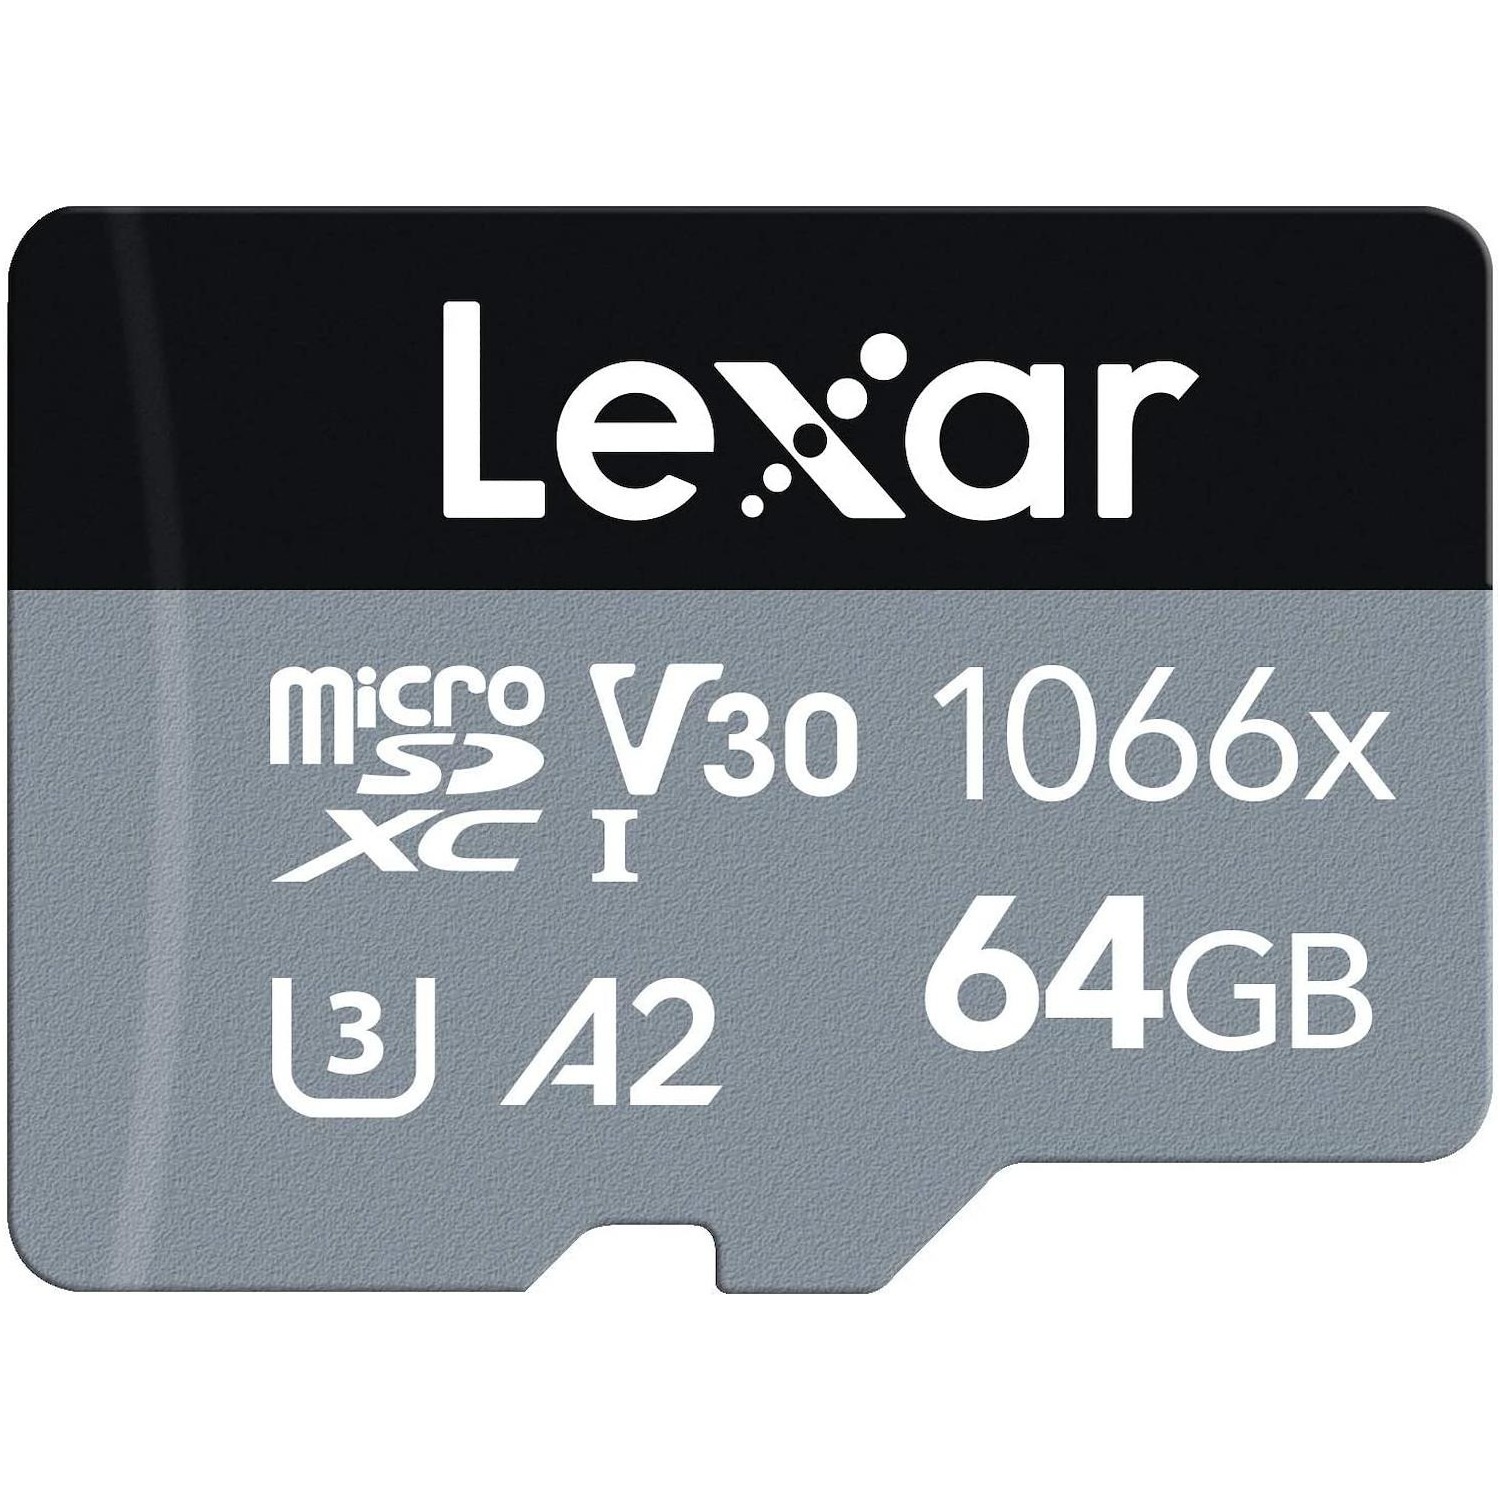 Immagine per MicroSD Lexar 64GB 1066X CL.10 da DIMOStore